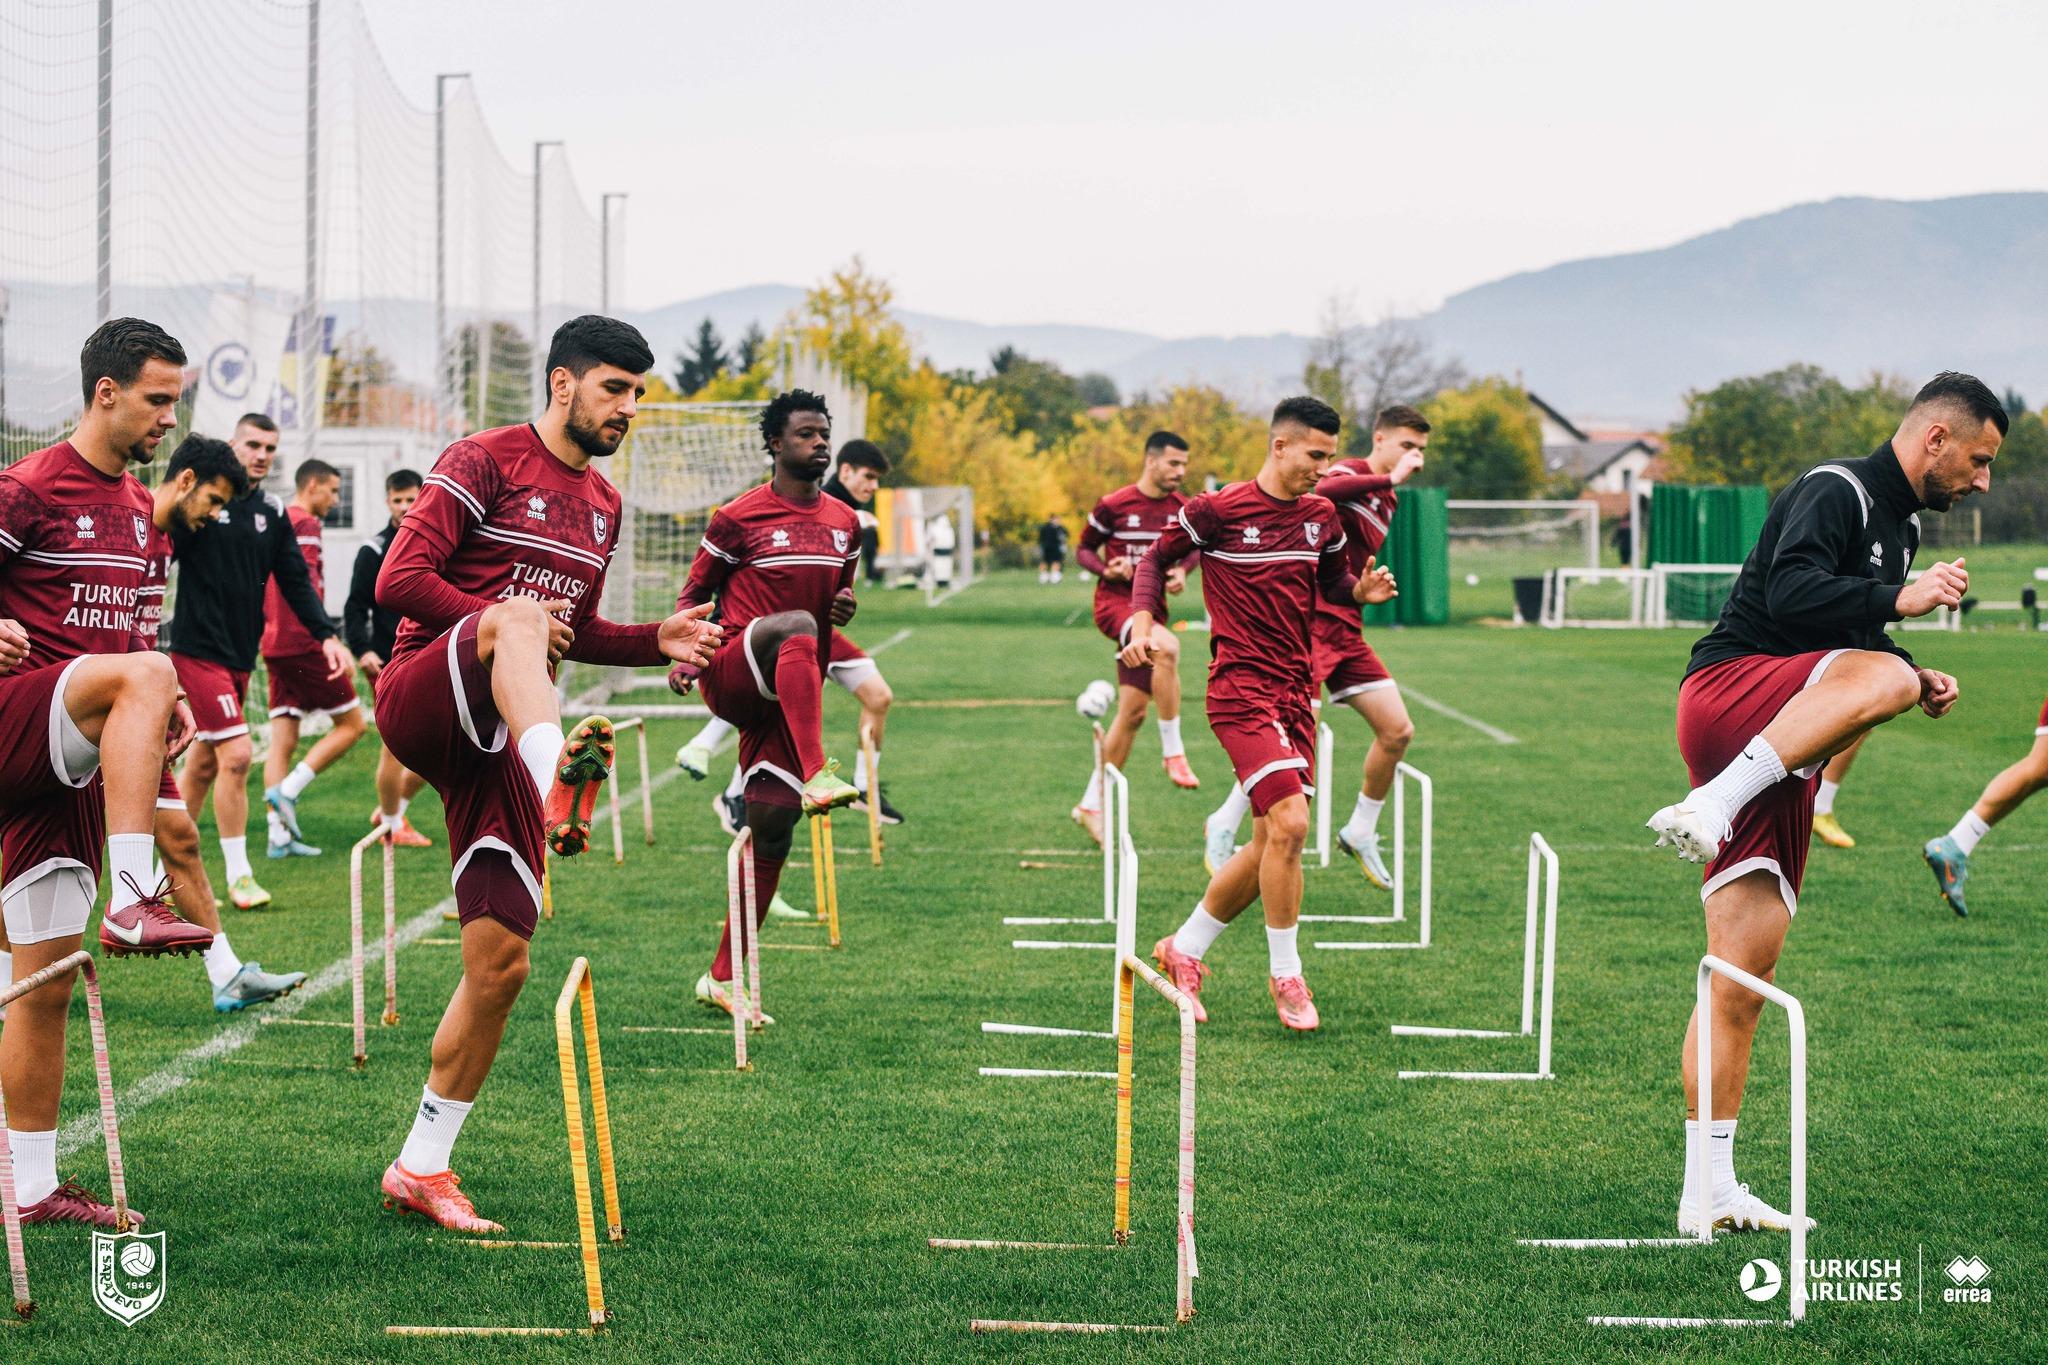 Fudbaleri Sarajeva treniraju u sumornoj atmosferi - Avaz